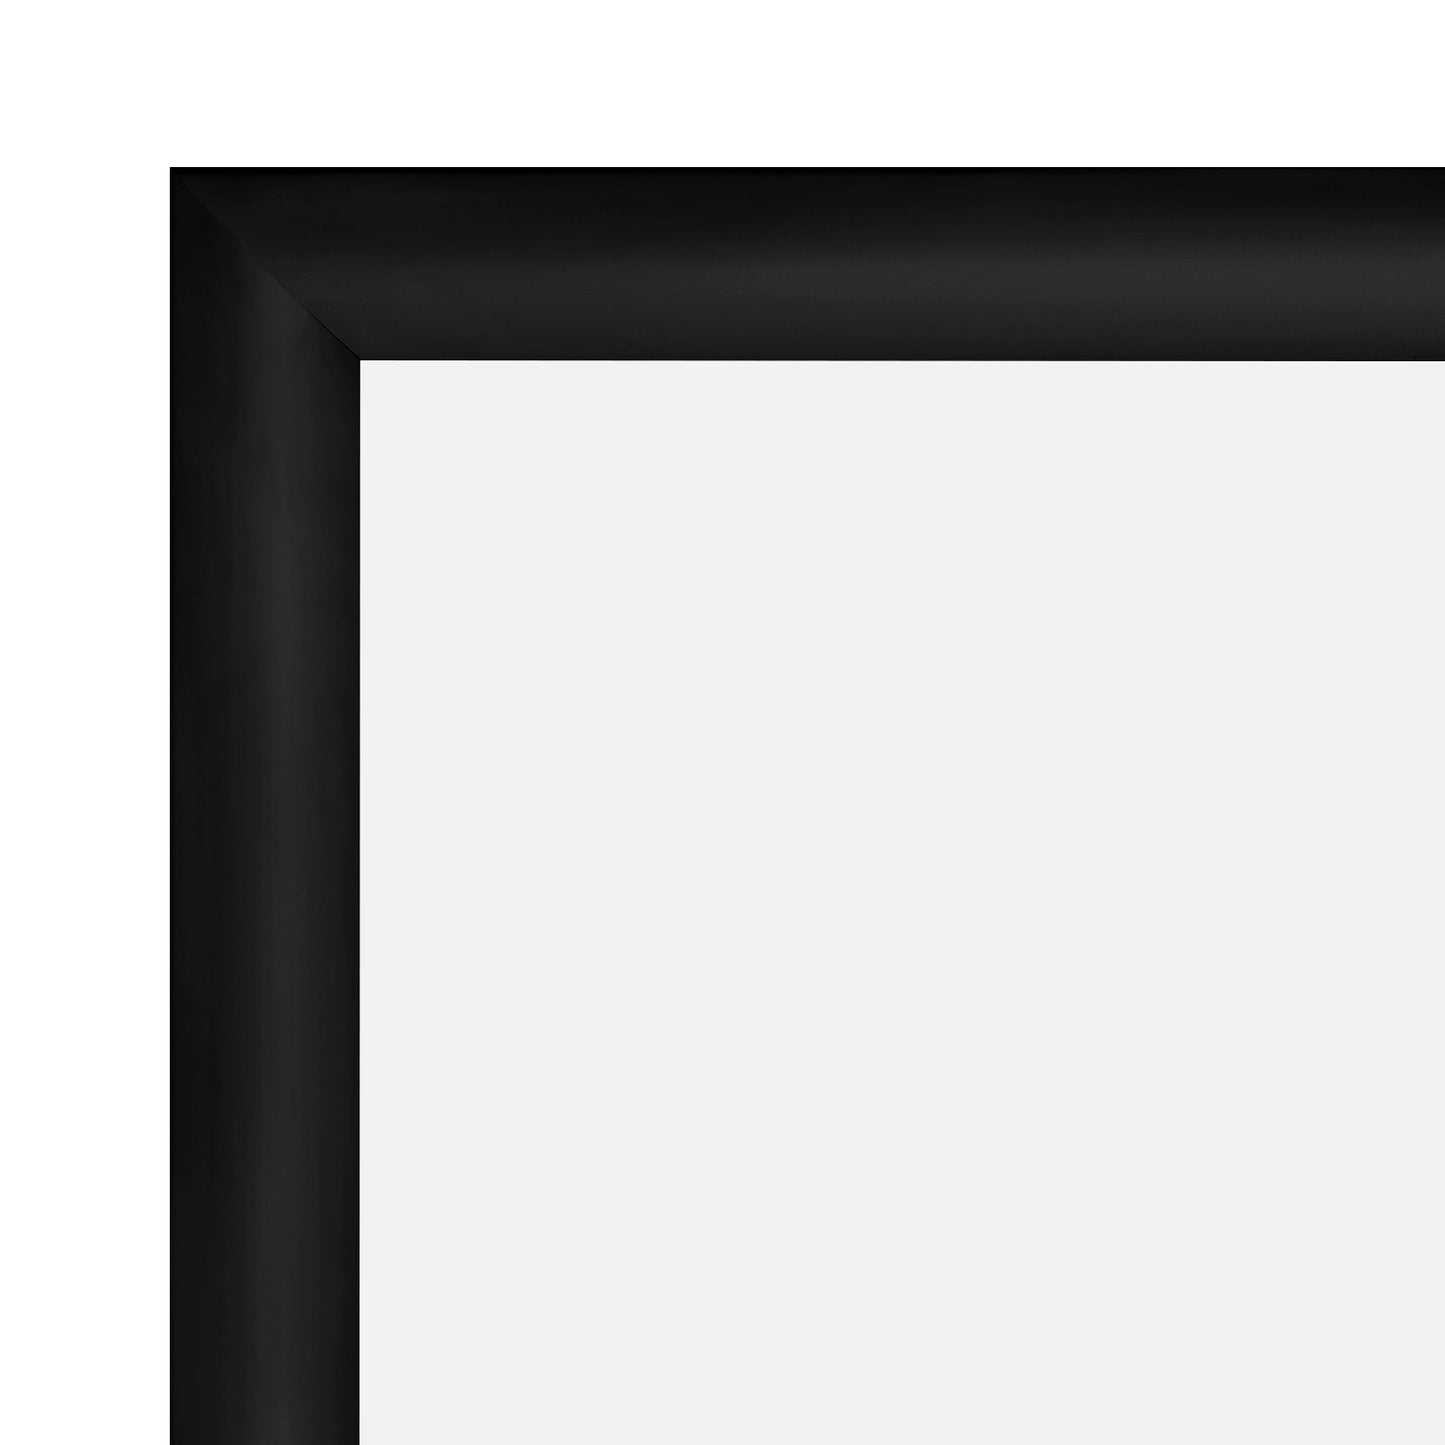 25x37 Black SnapeZo® Snap Frame - 1.2" Profile - Snap Frames Direct